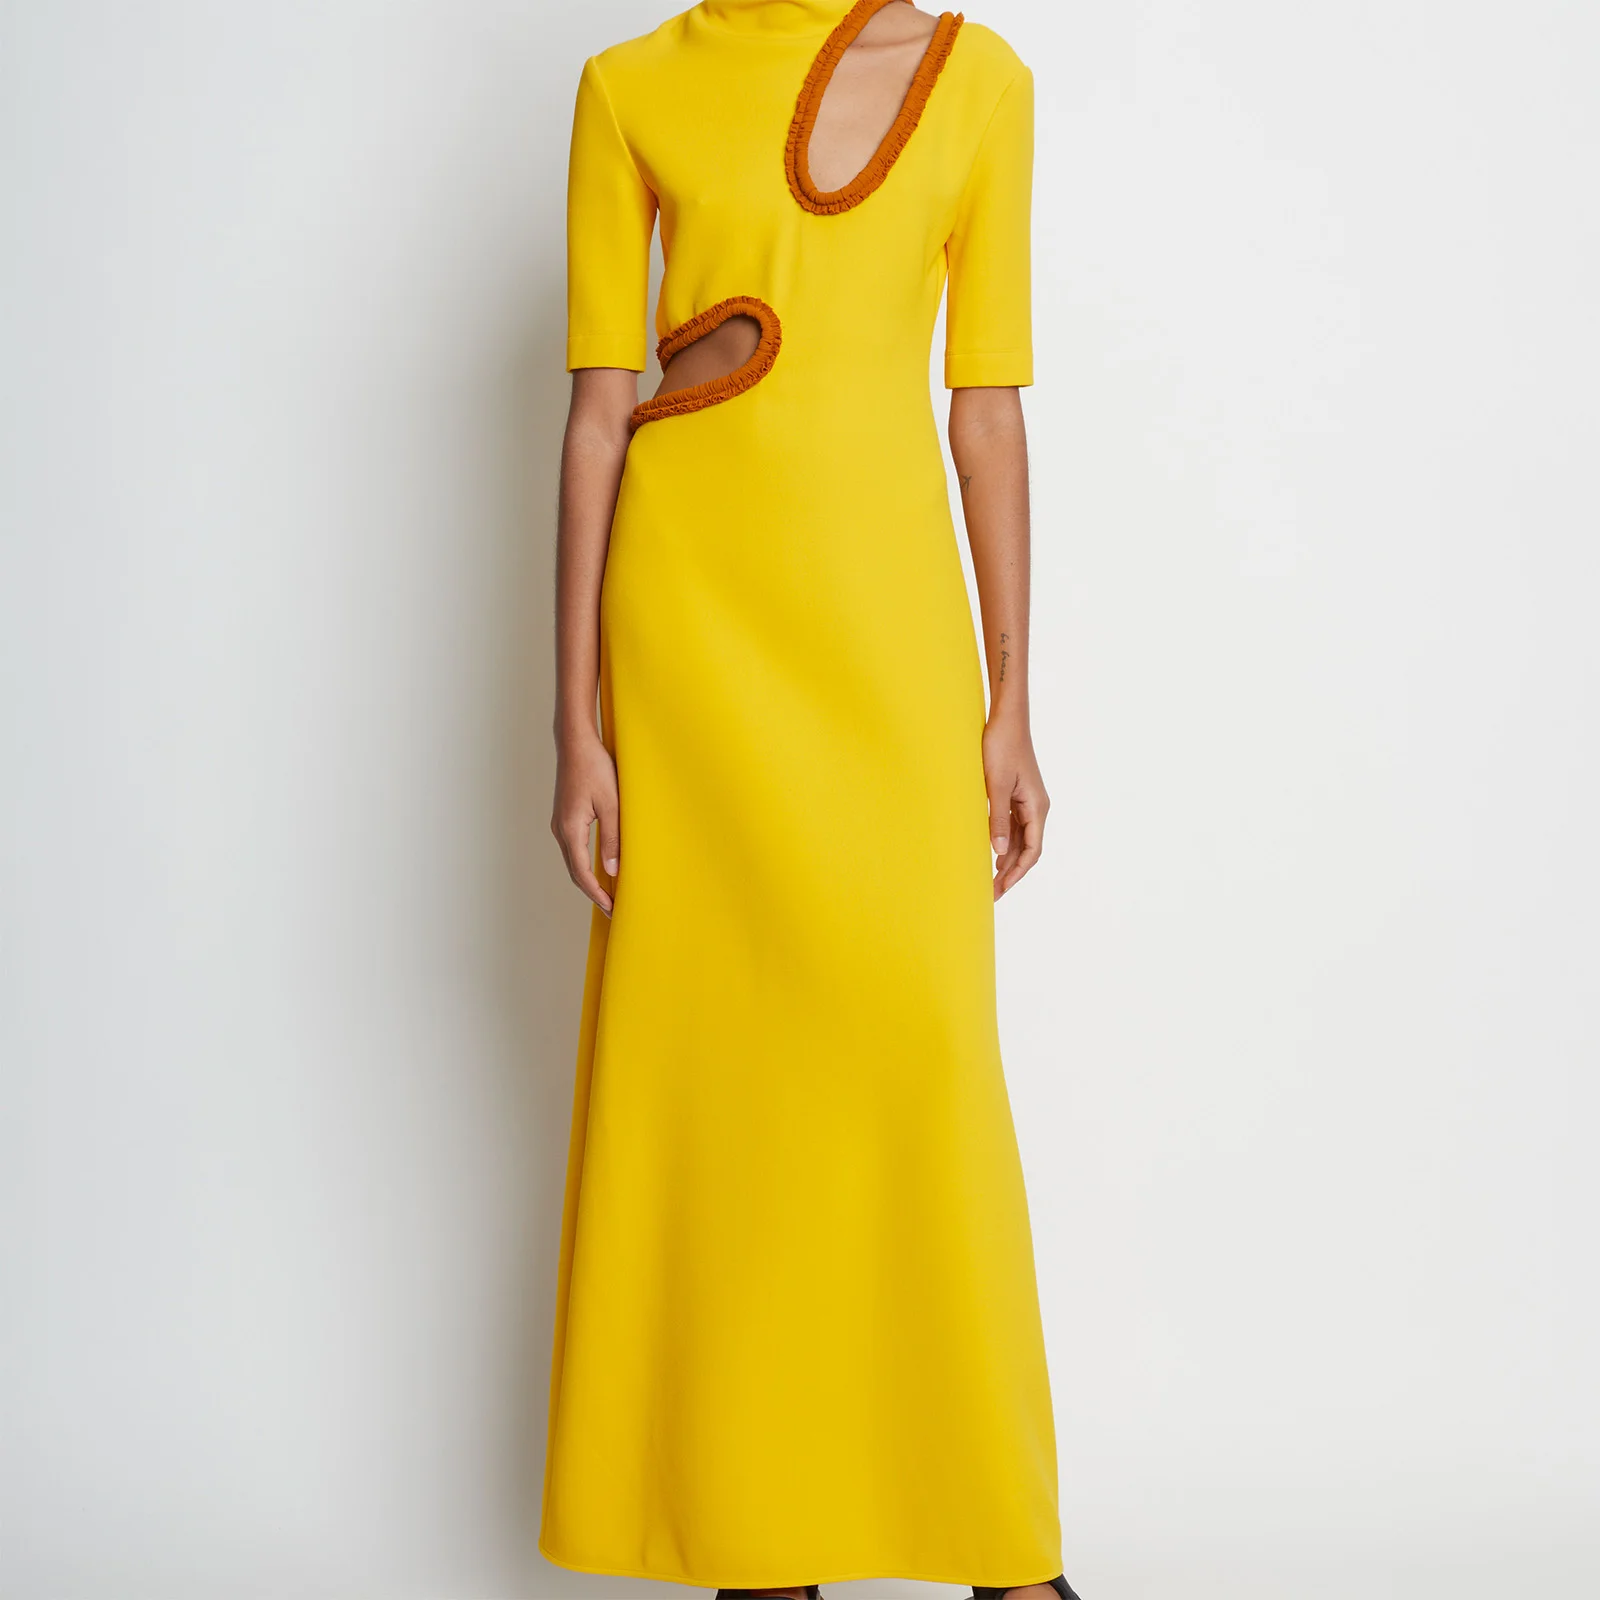 Proenza Schouler Women's Bi-Stretch Crepe Cut Out Dress - Lemon Image 1